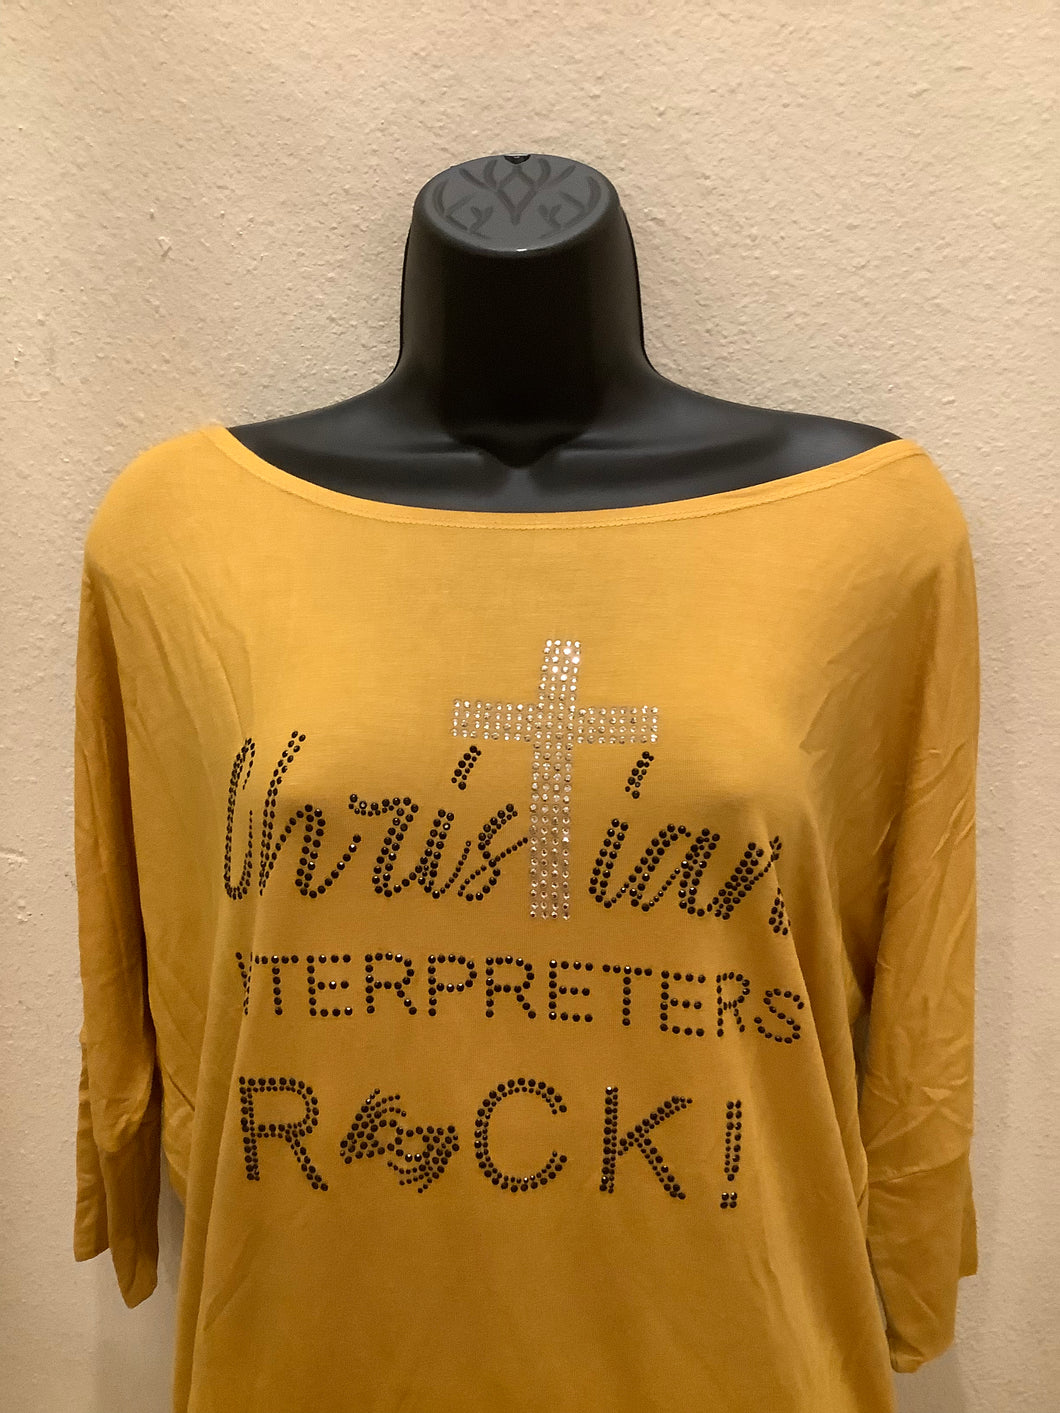 Off-shoulder Christian Interpreters Rock